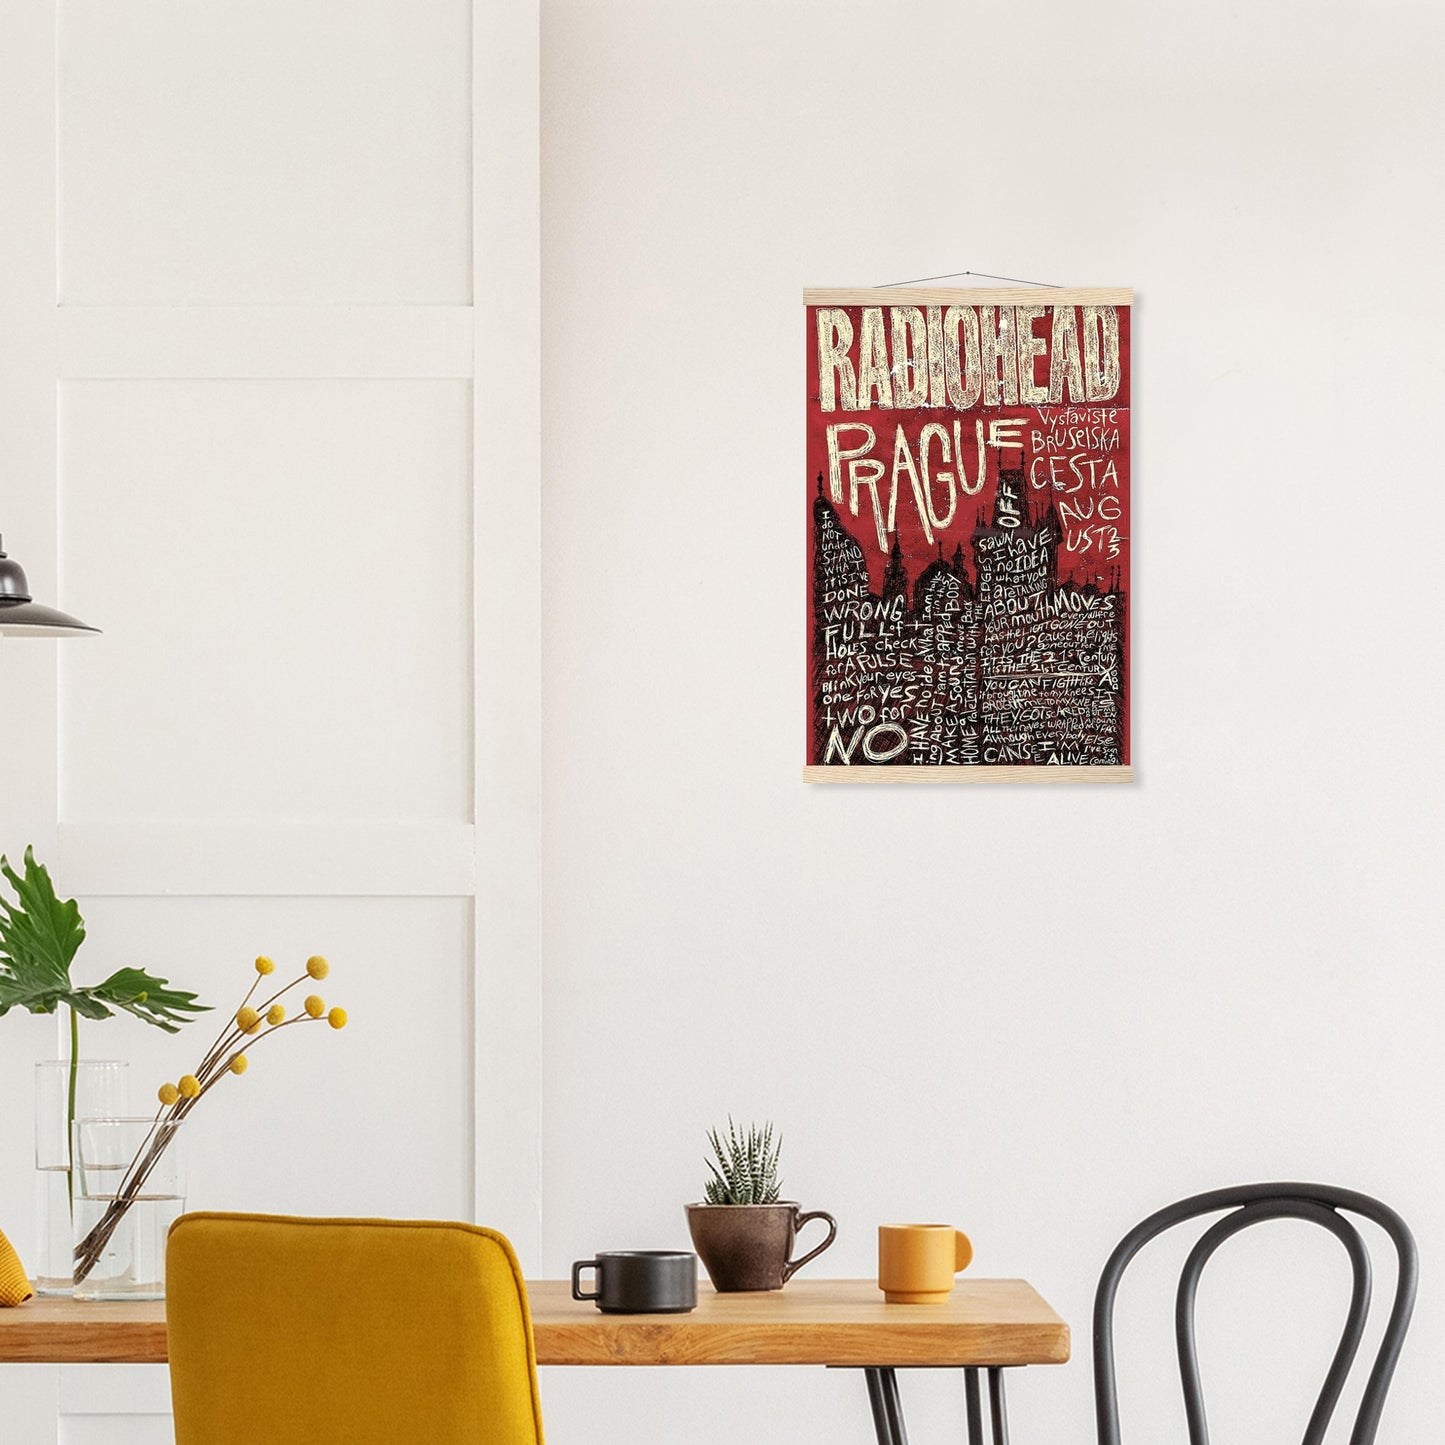 Radiohead Prague Vintage Poster reprint on Premium Poster Matte Paper - Posterify